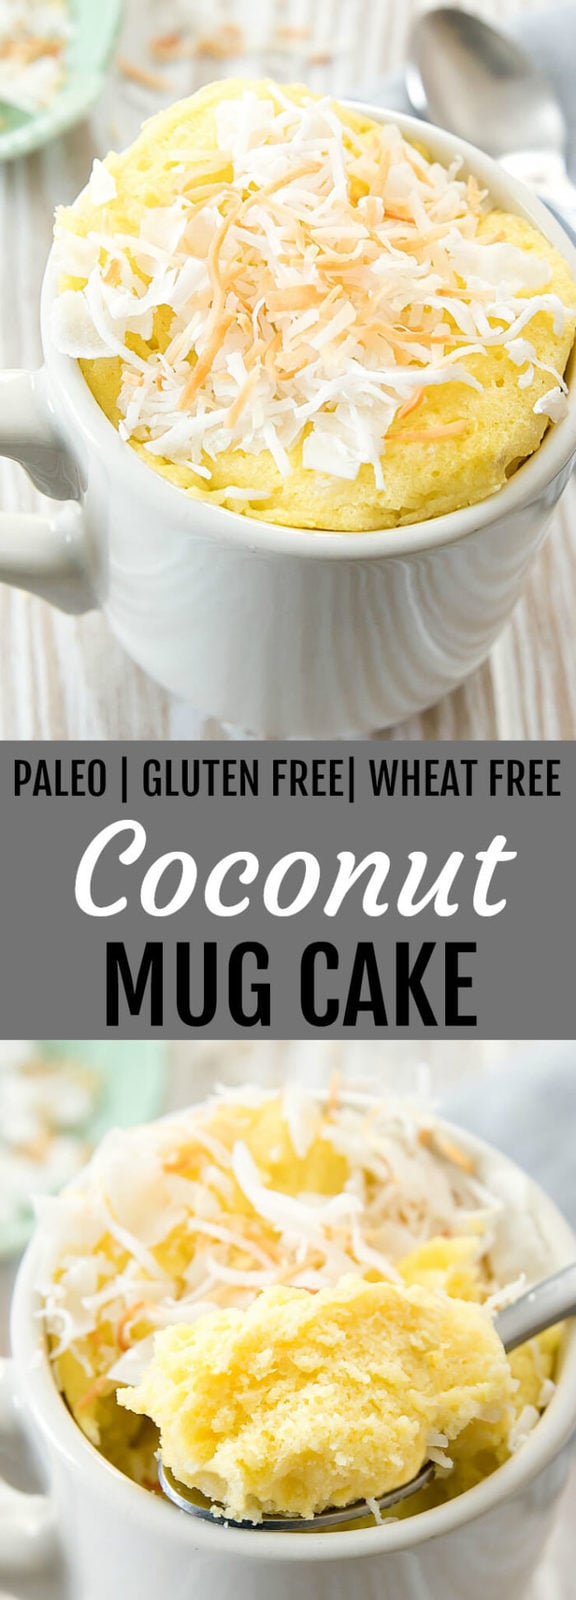 Coconut Mug Cake (Paleo, Gluten Free)